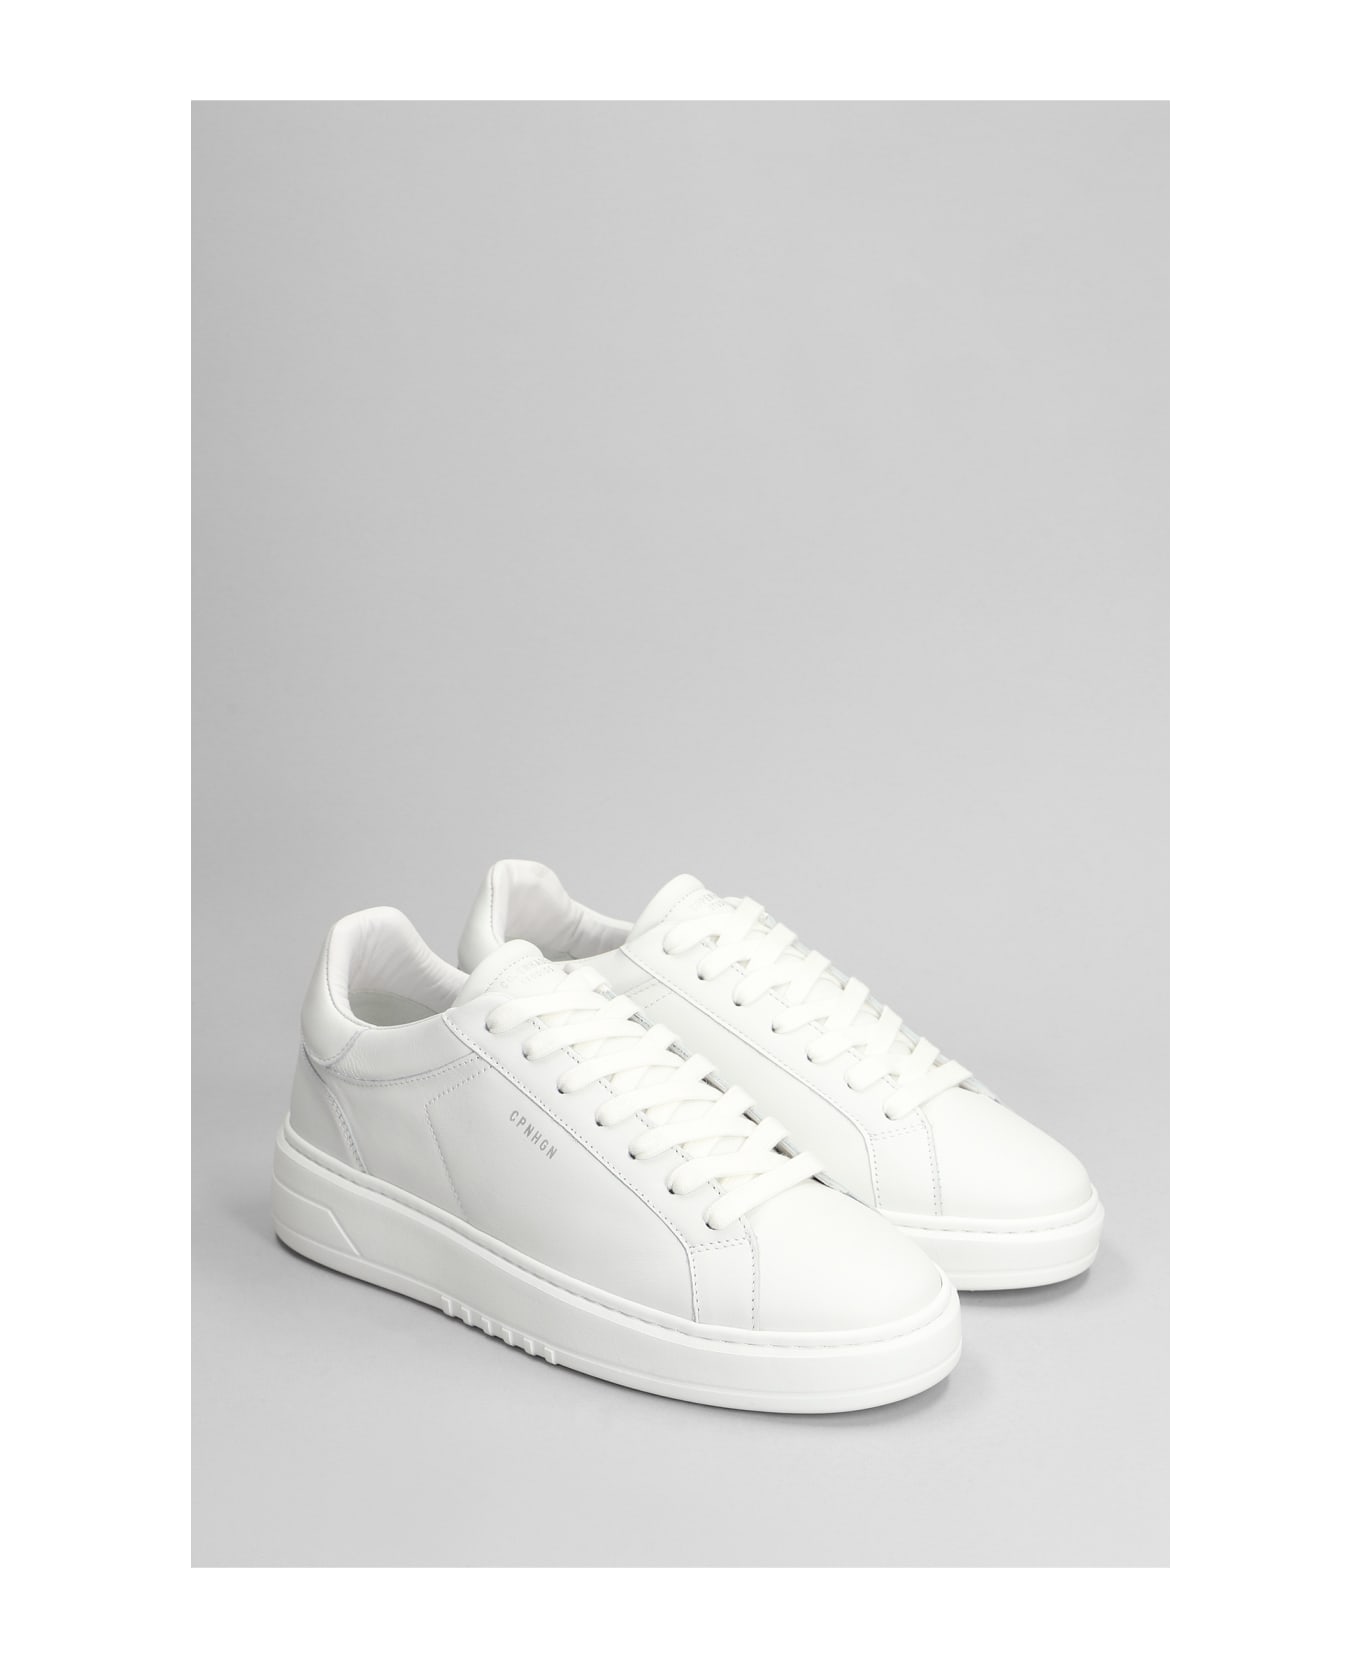 Copenhagen Sneakers In White Leather - white